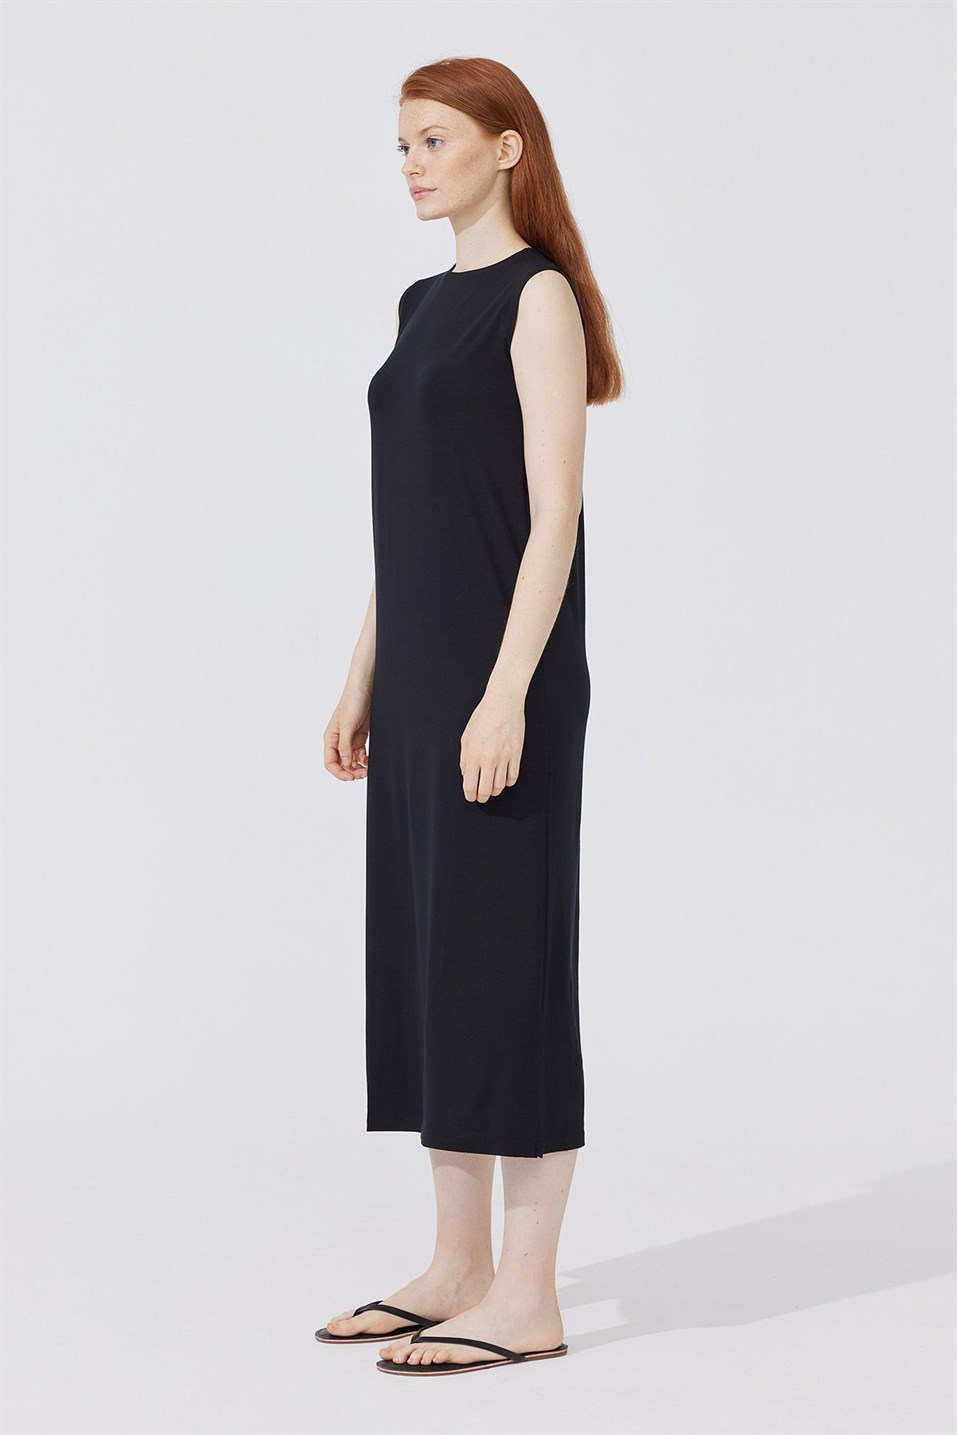 Black Zero Sleeve Lining Combed Cotton Dress